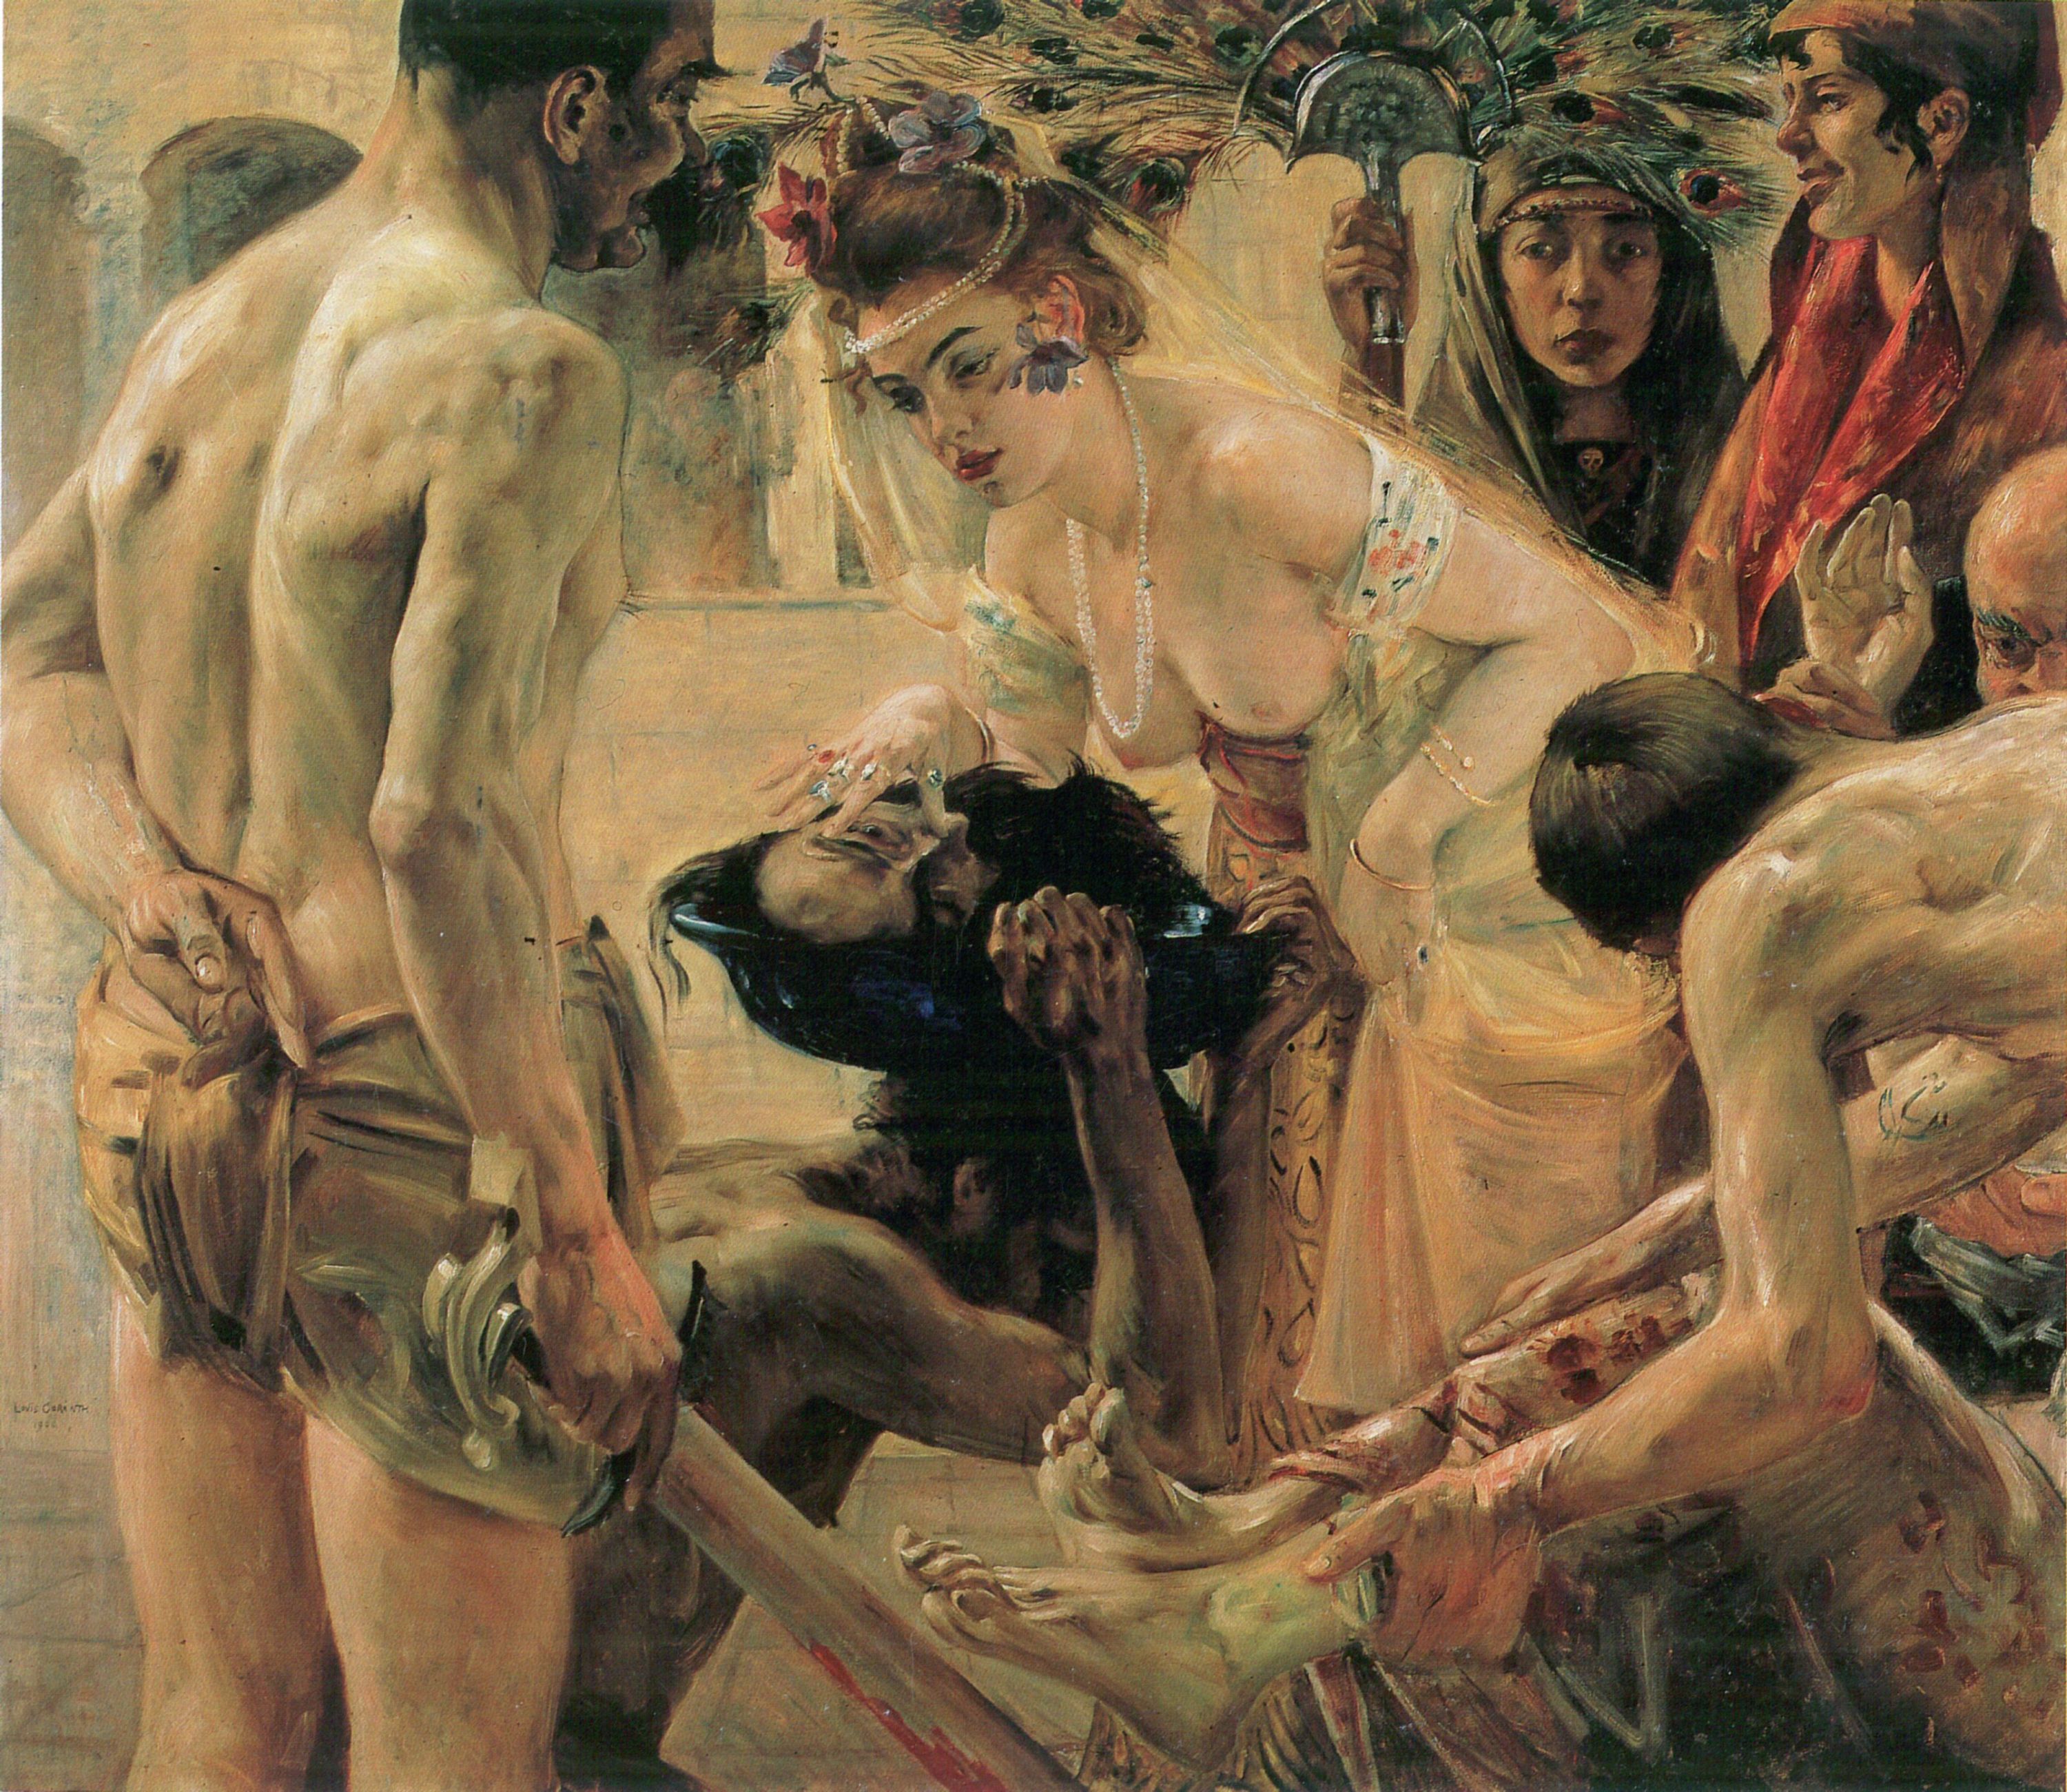 Salomé II by Lovis Corinth - 1889 - 76.2 x 83.5 cm Harvard Art Museums